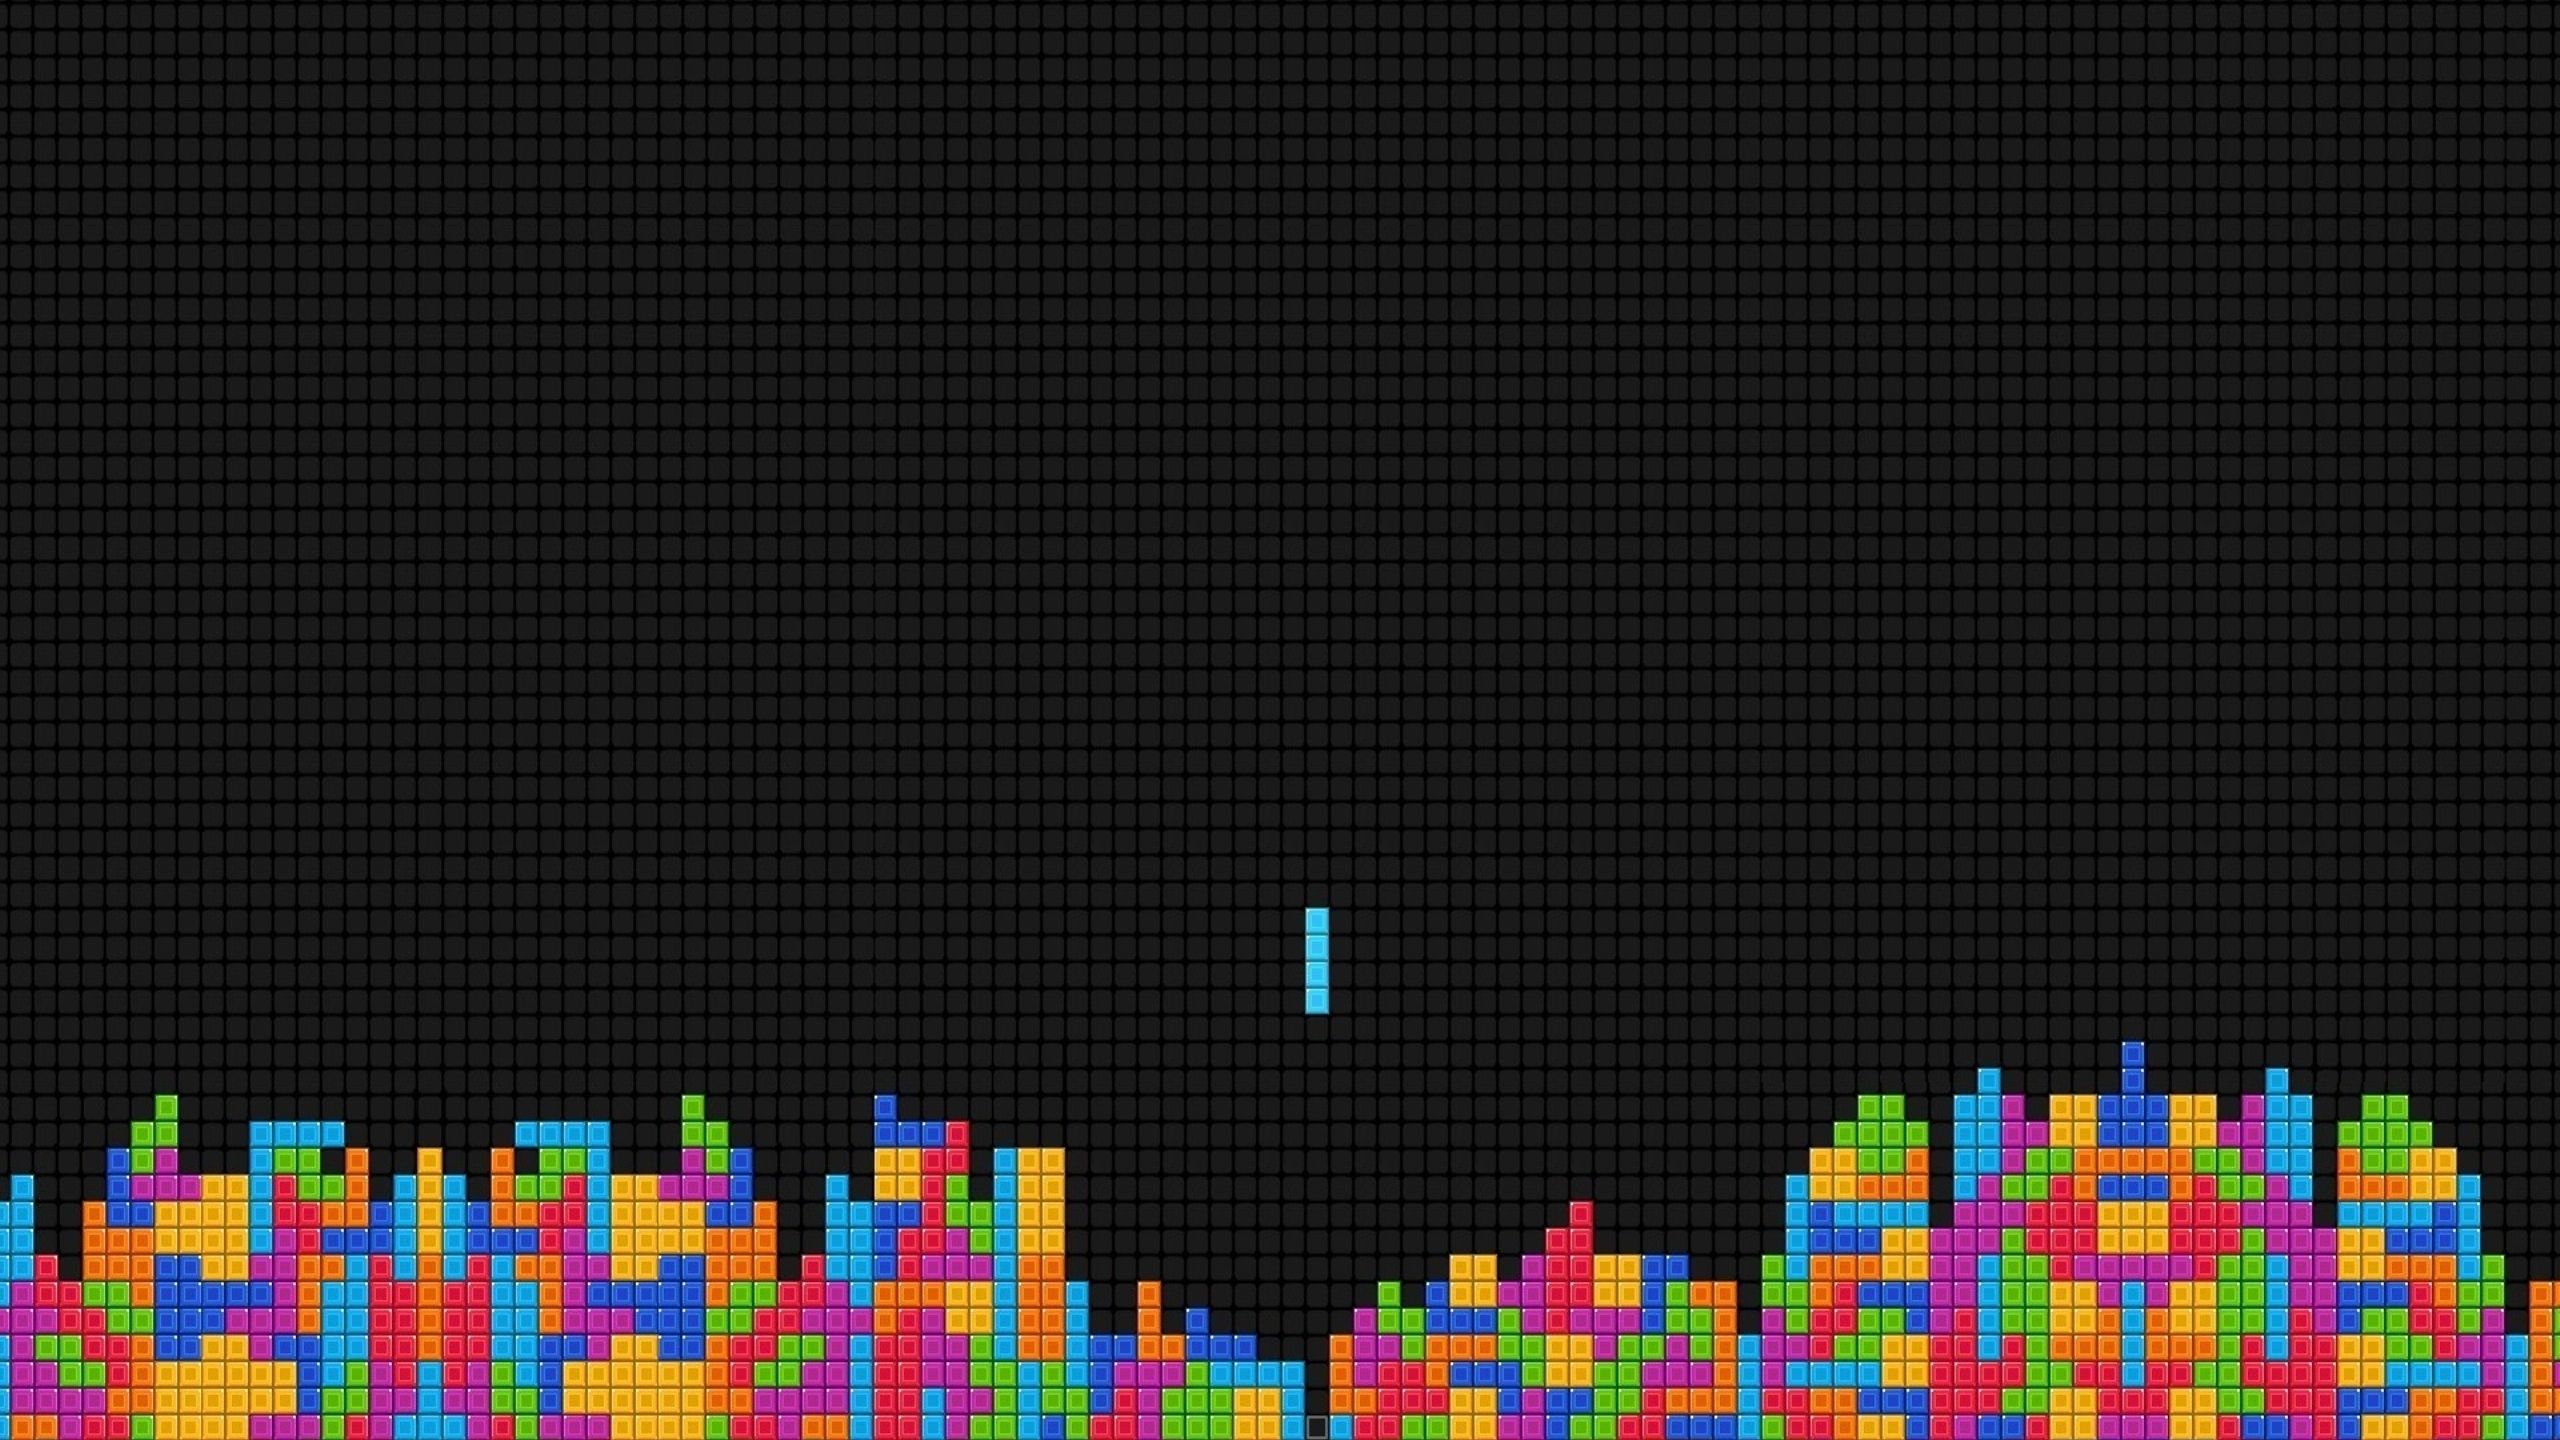 Tetris Mac Wallpaper Download Free Mac Wallpapers Download